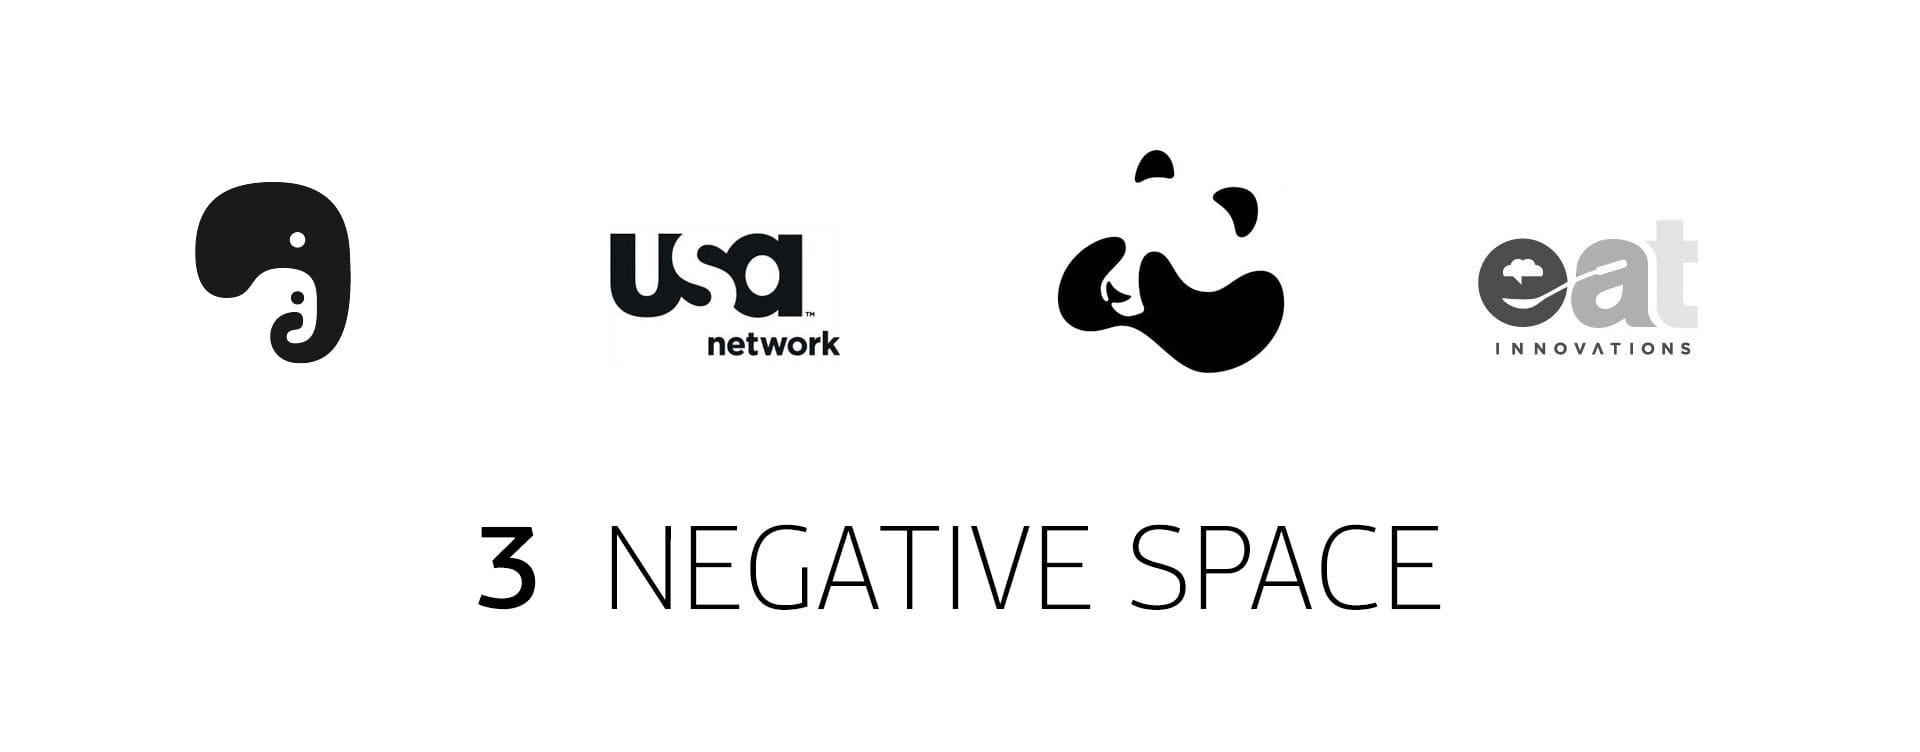 Негативное пространство логотипа negative space logo